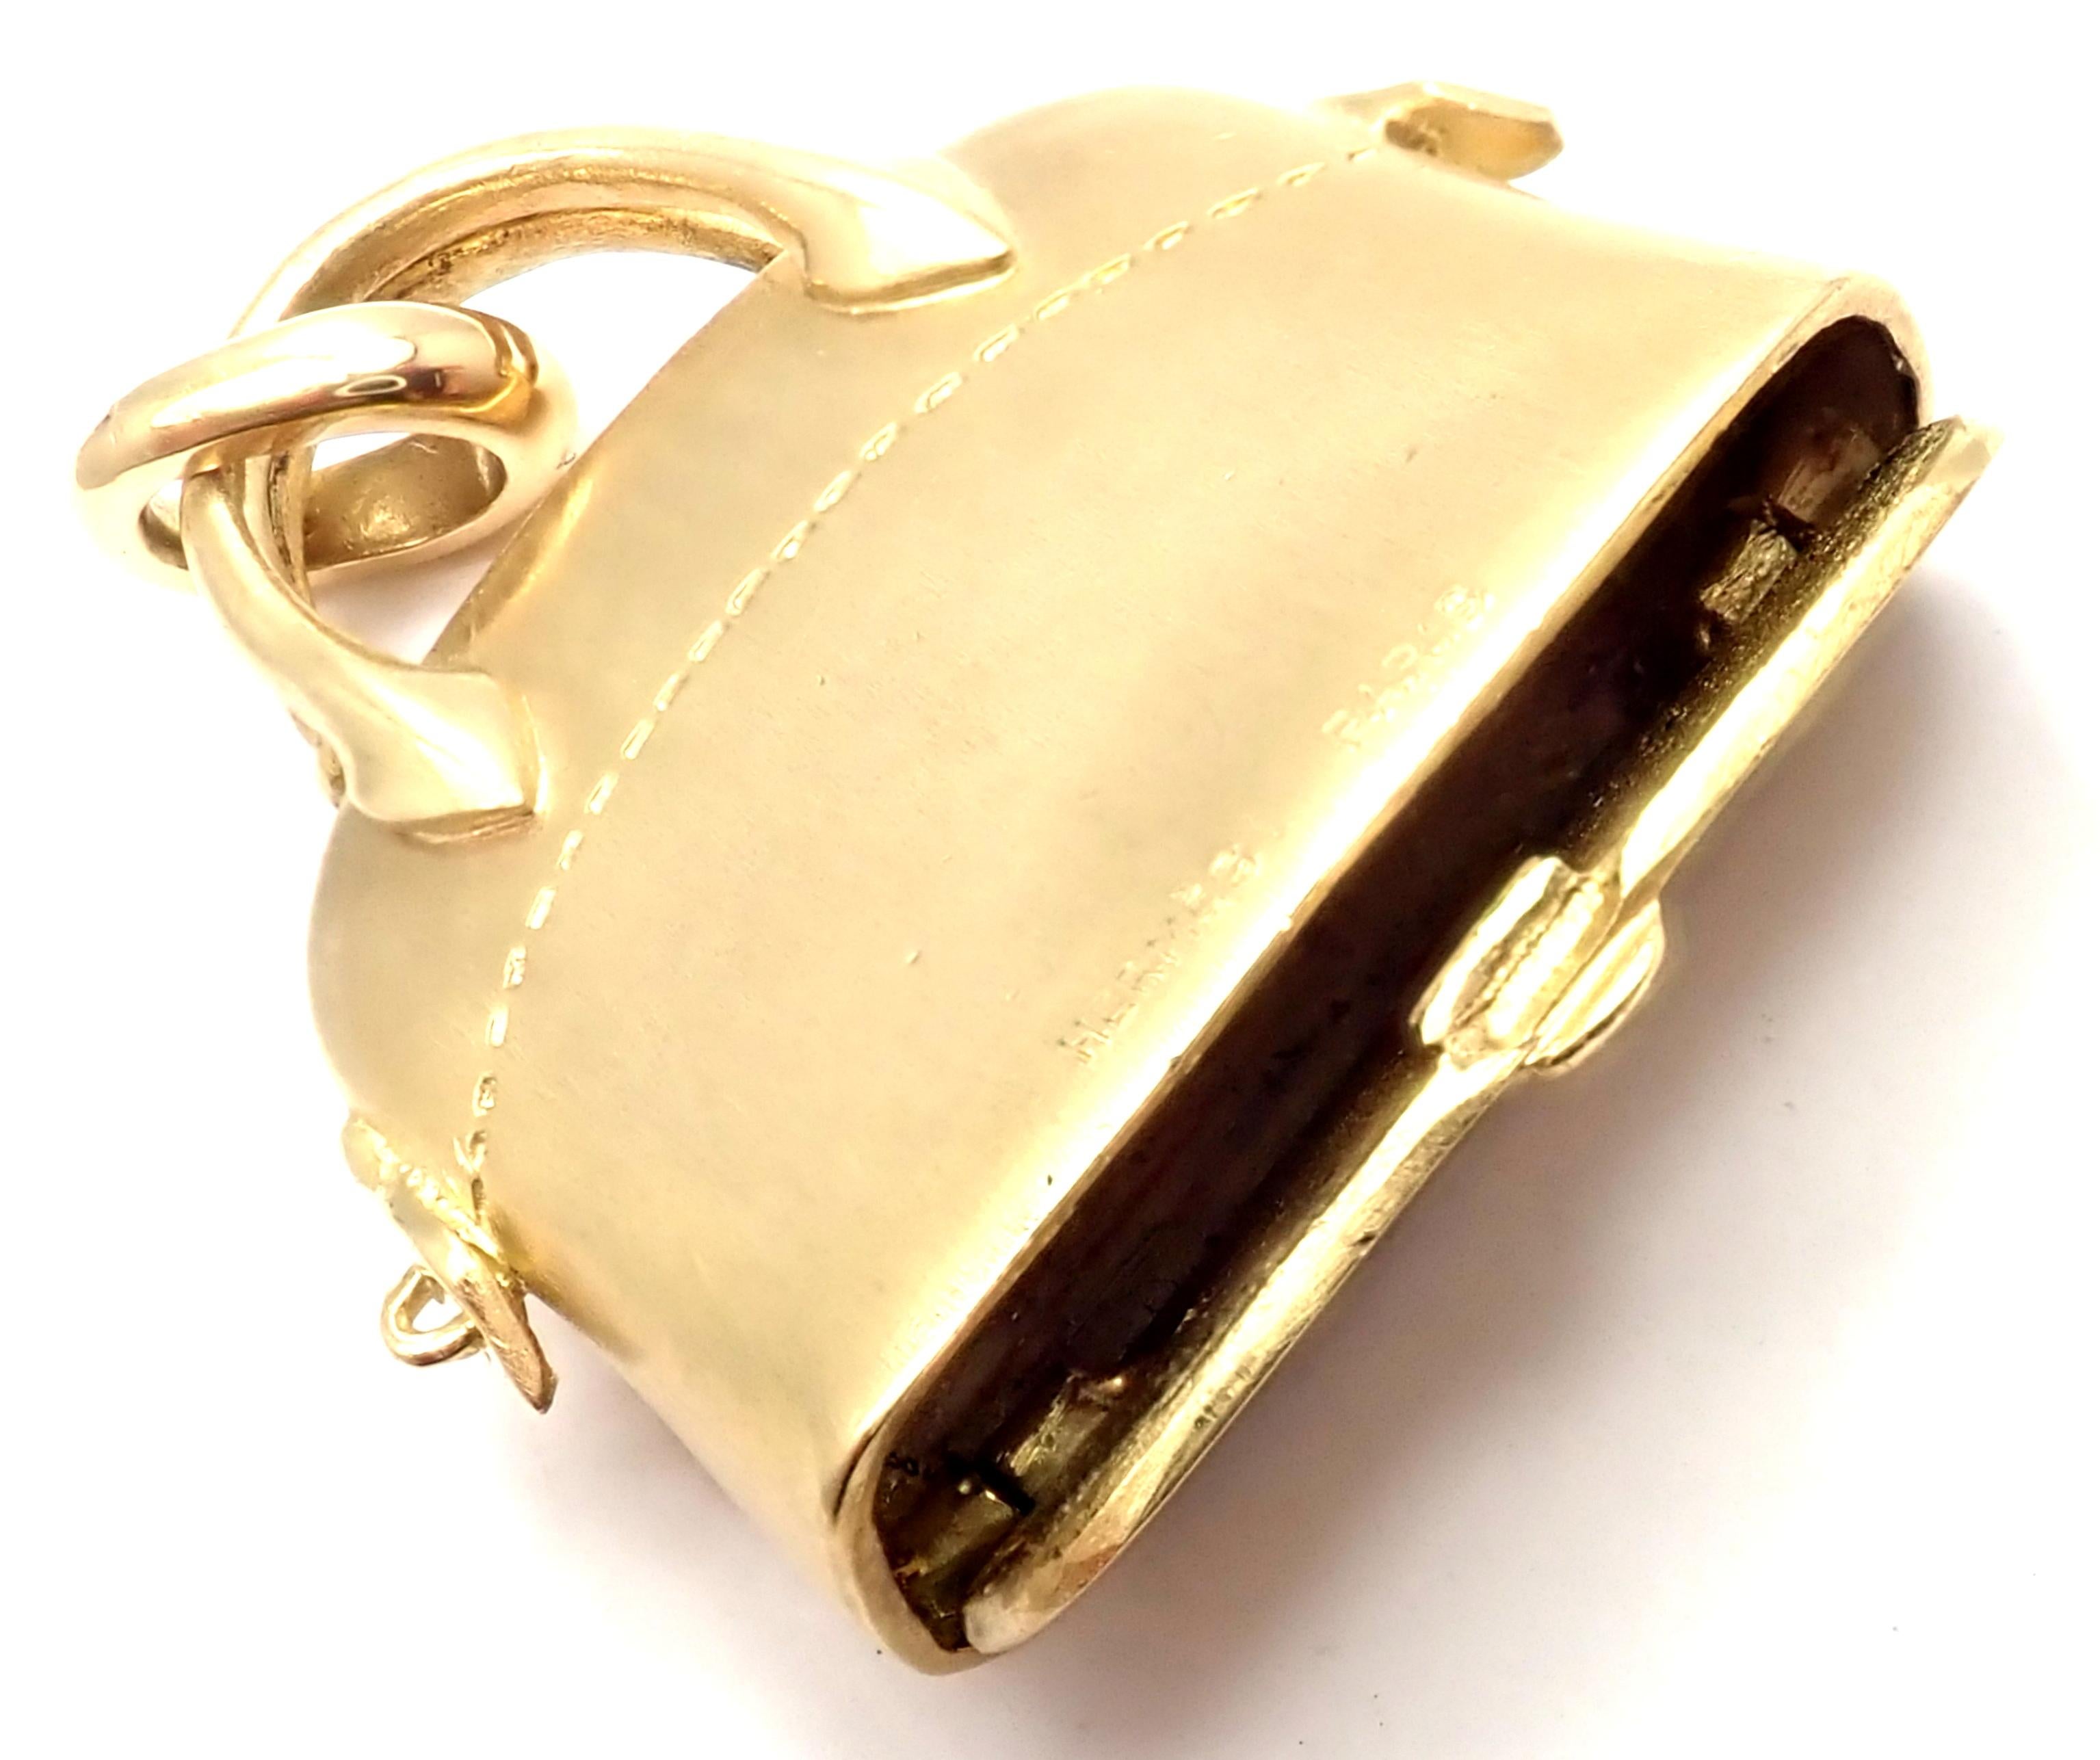 Hermès Bolide Bag Purse Large Yellow Gold Charm Pendant 1